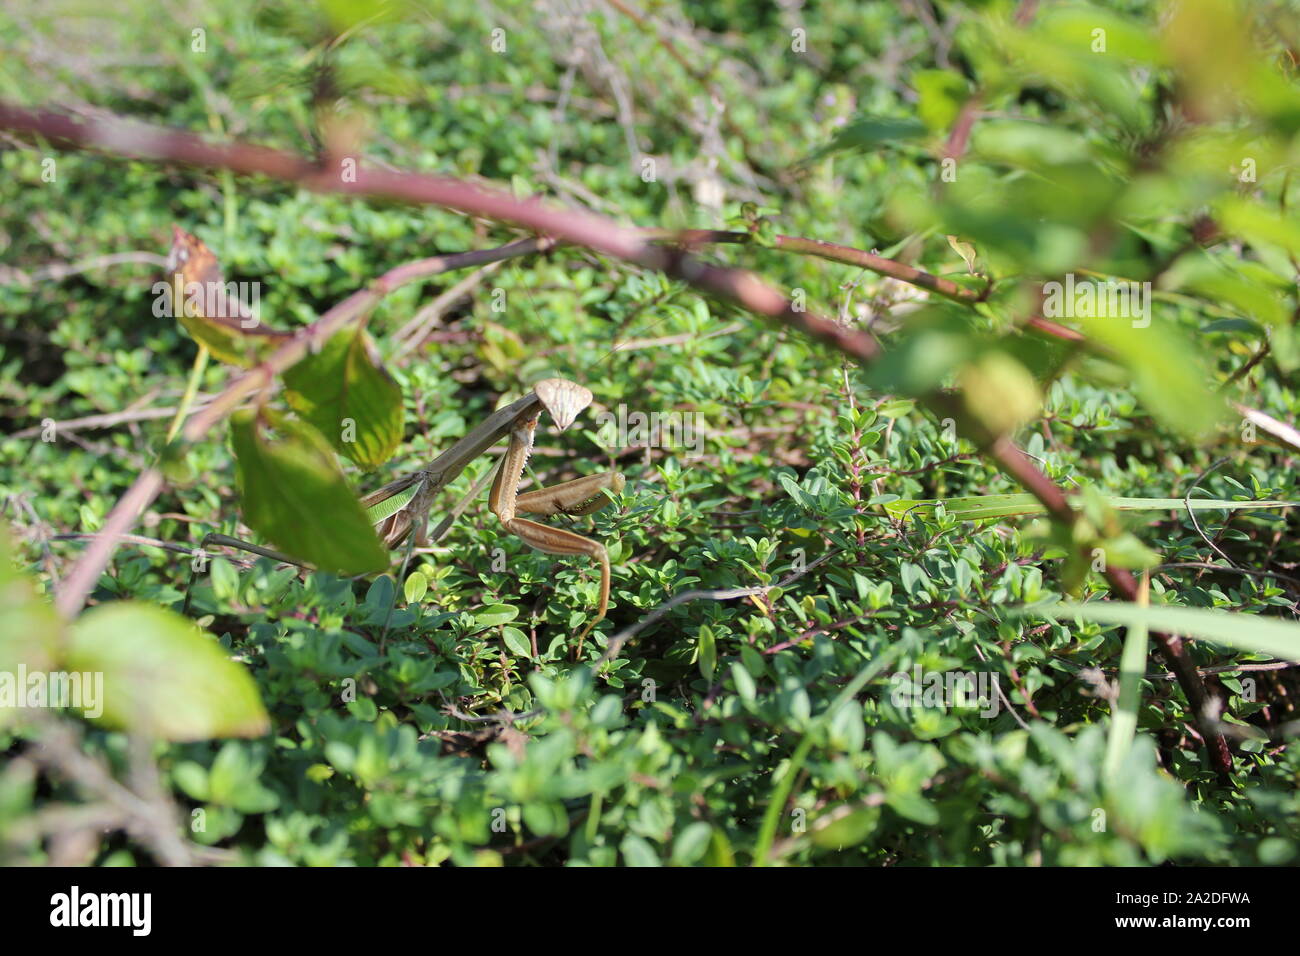 Adult Praying mantid, mantis, insect walking around its autumn garden. Stock Photo